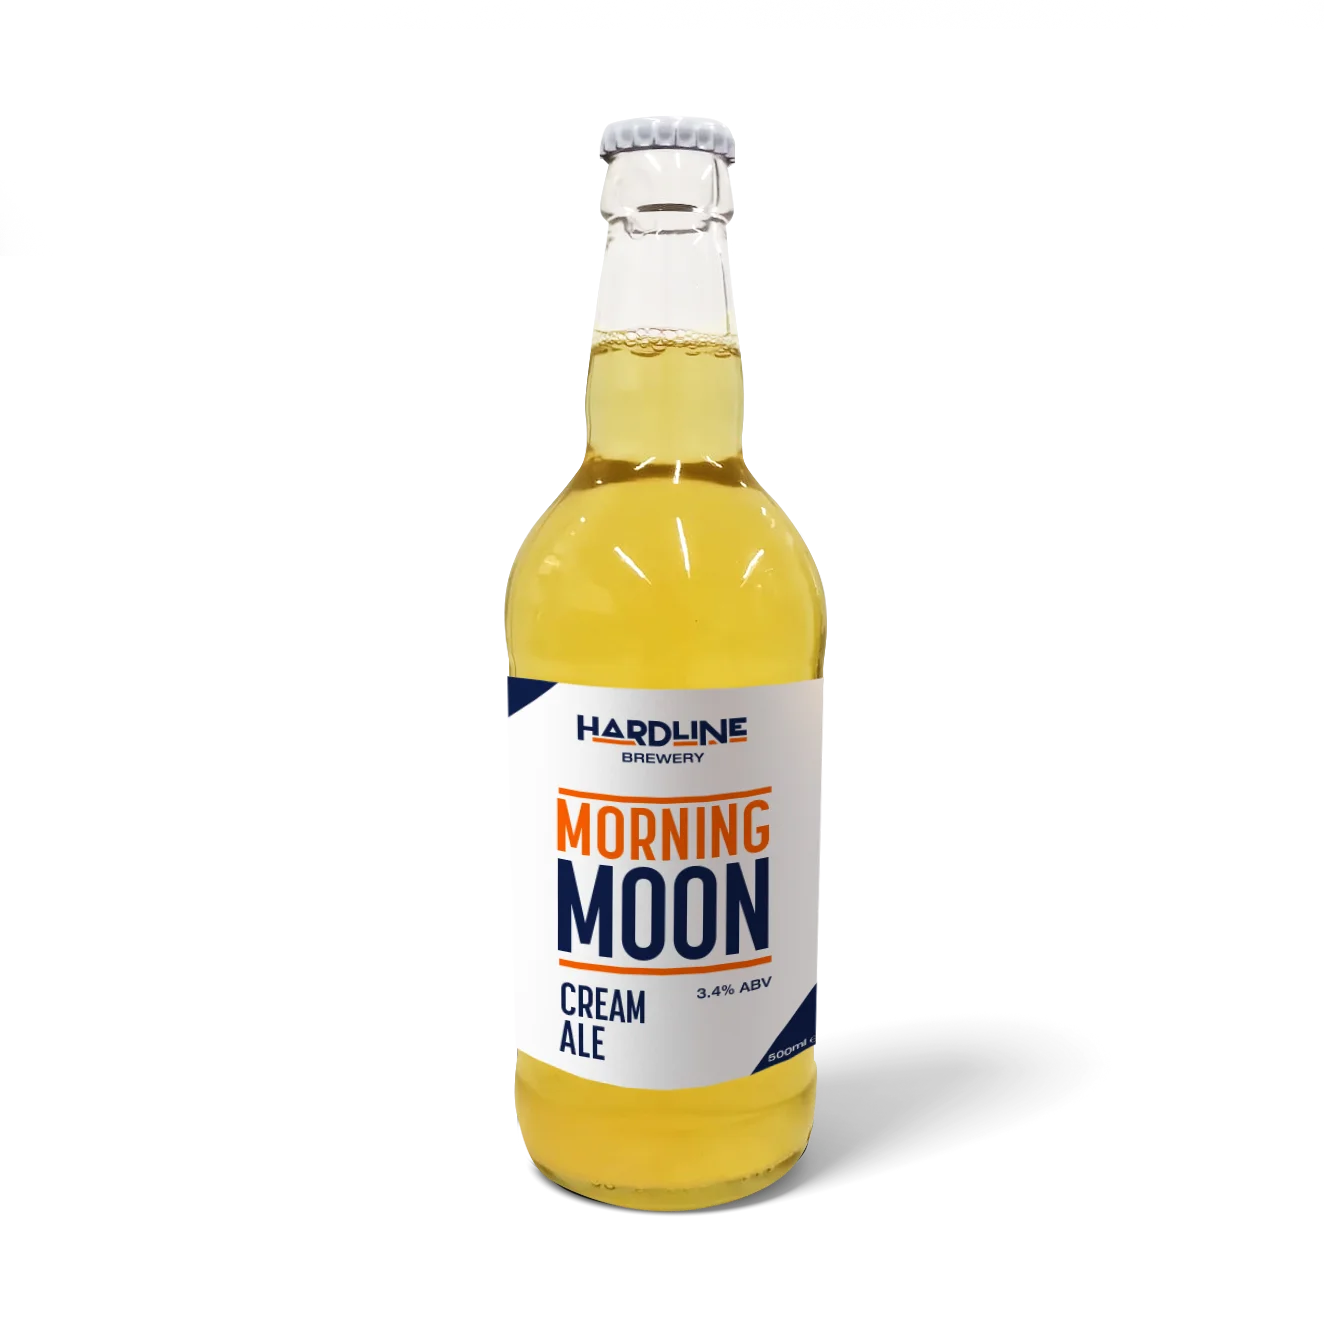 Morning Moon – Cream Ale